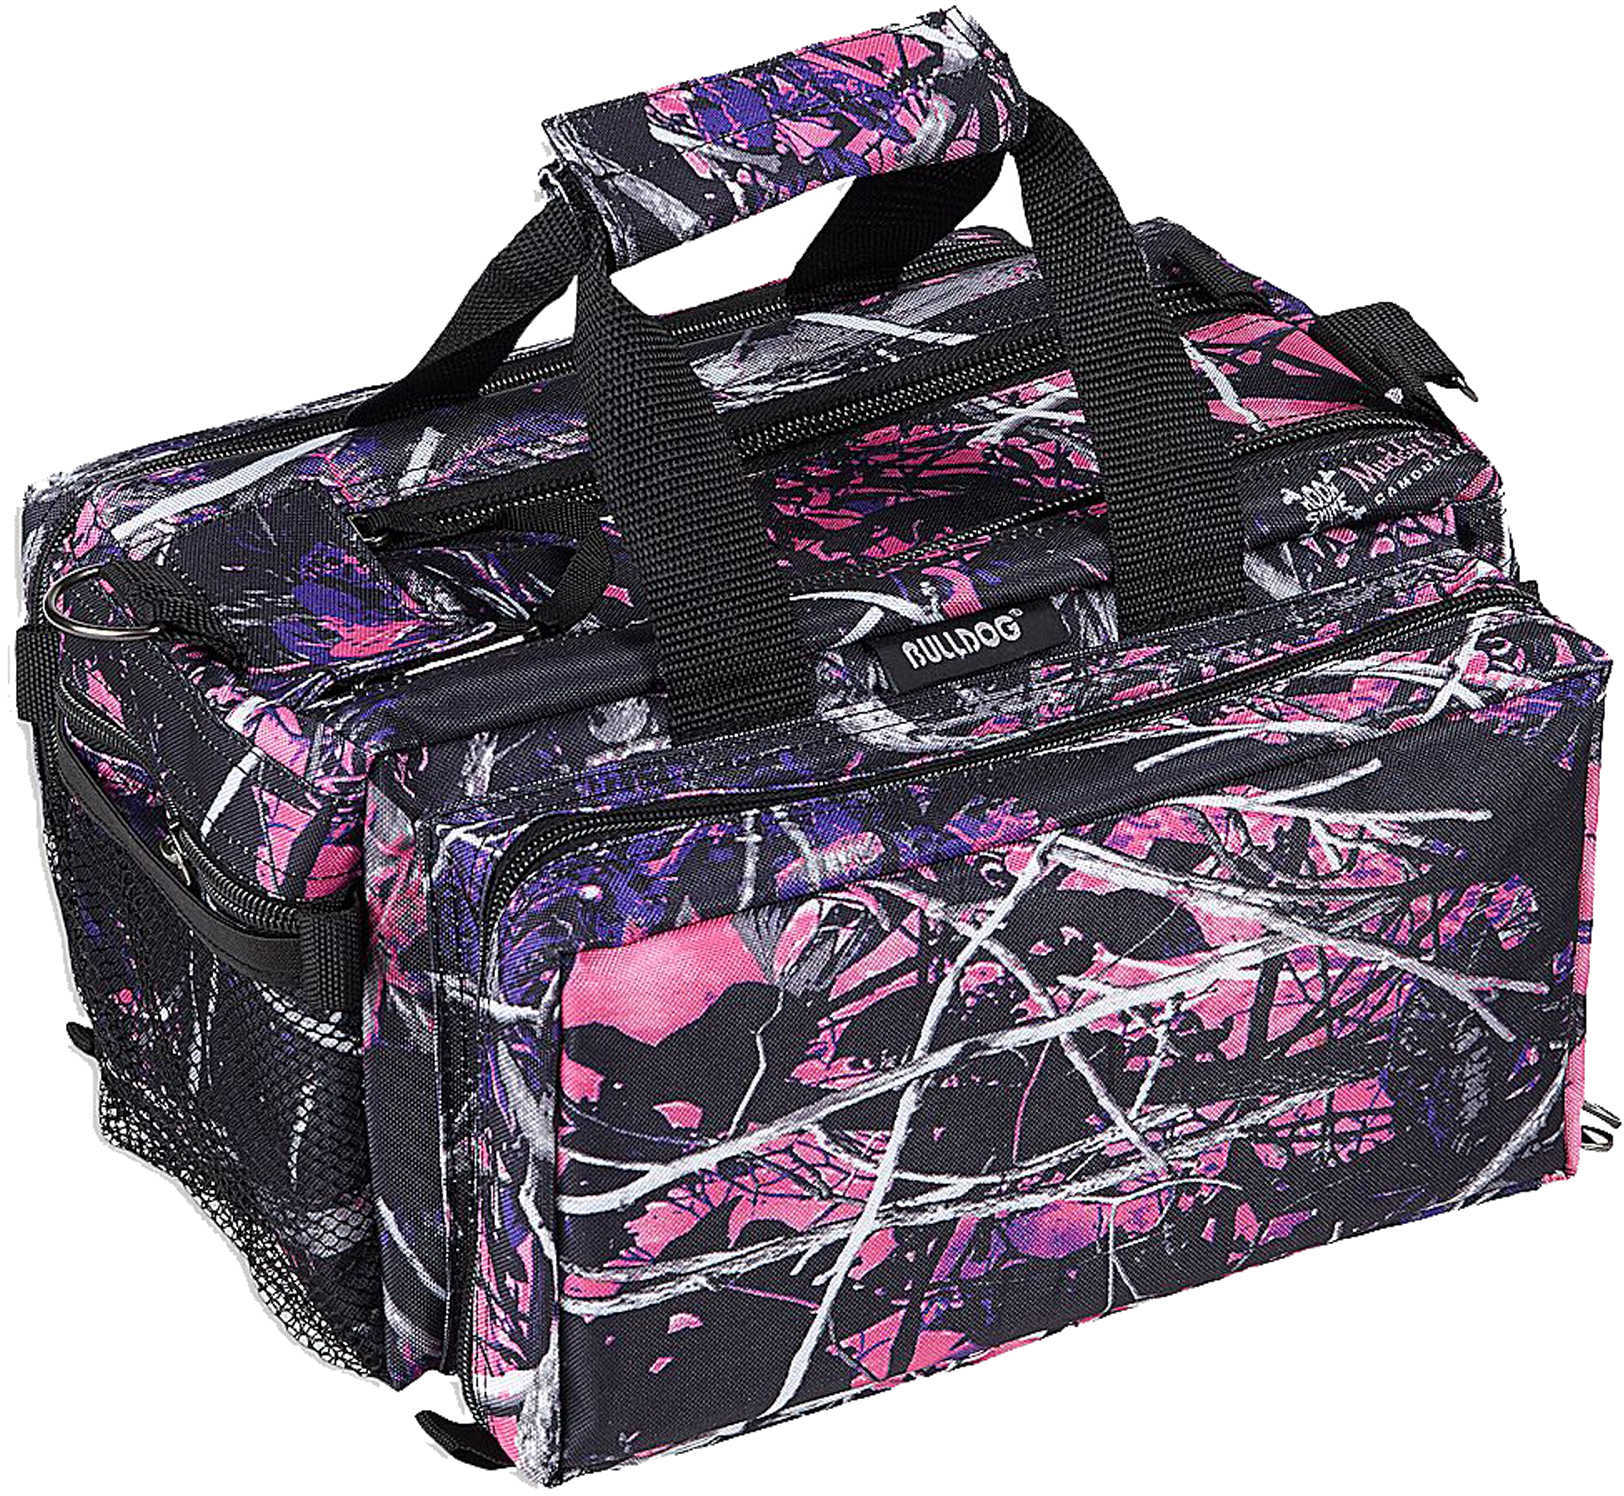 Bulldog Muddy Girl Range Bag With Strap - Pink Camo